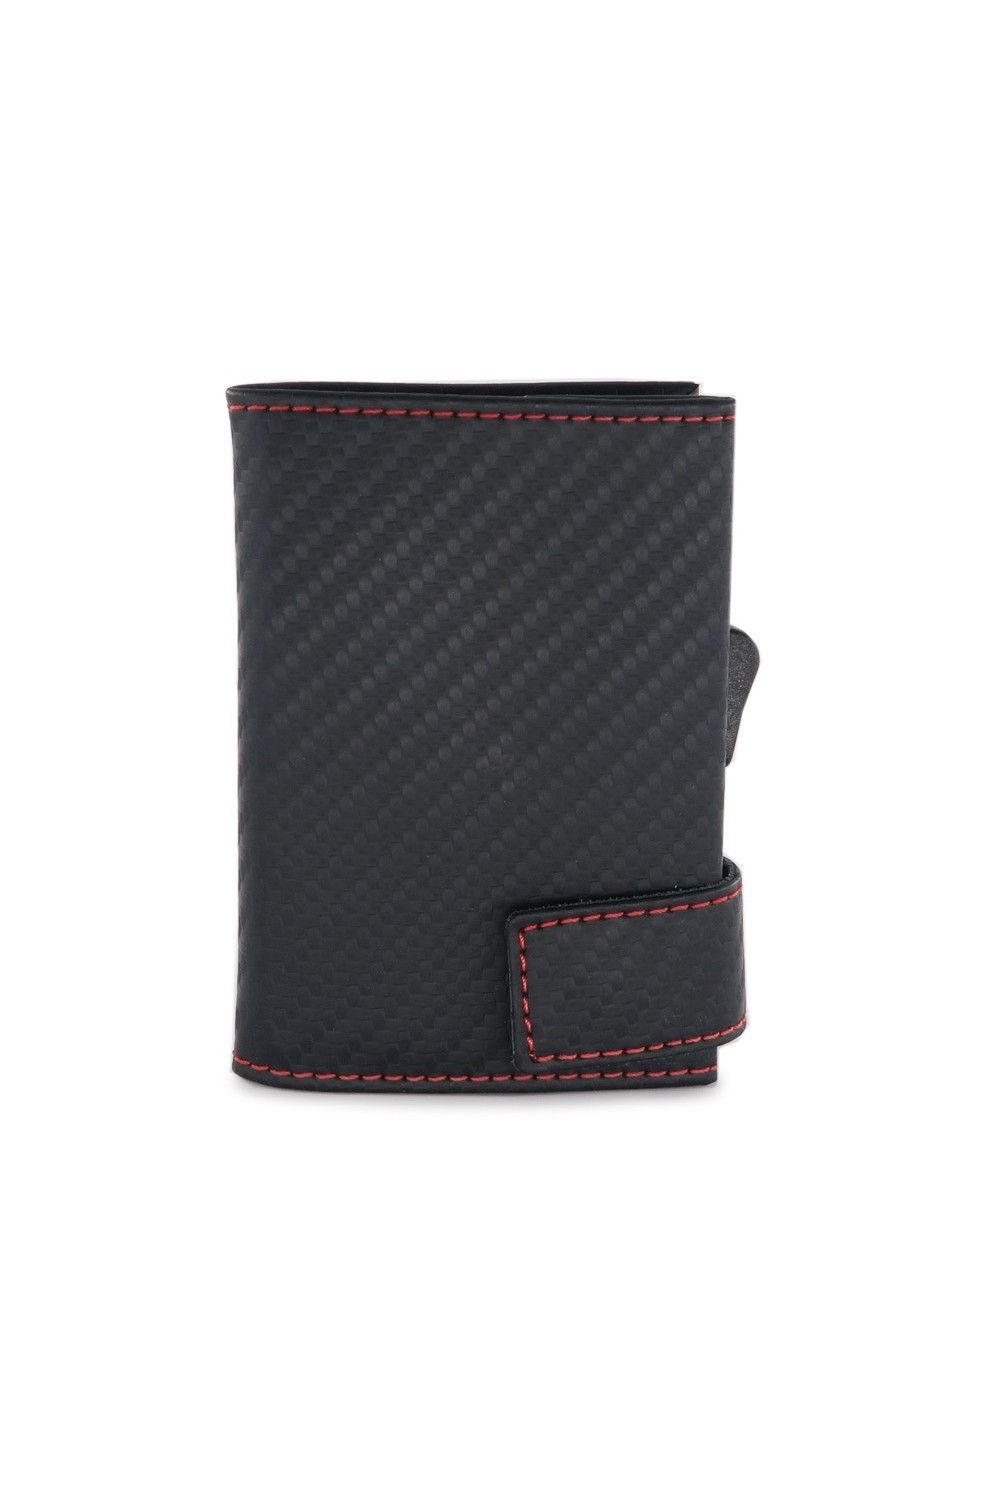 Porte-cartes SecWal RV Leather Carbon noir-red